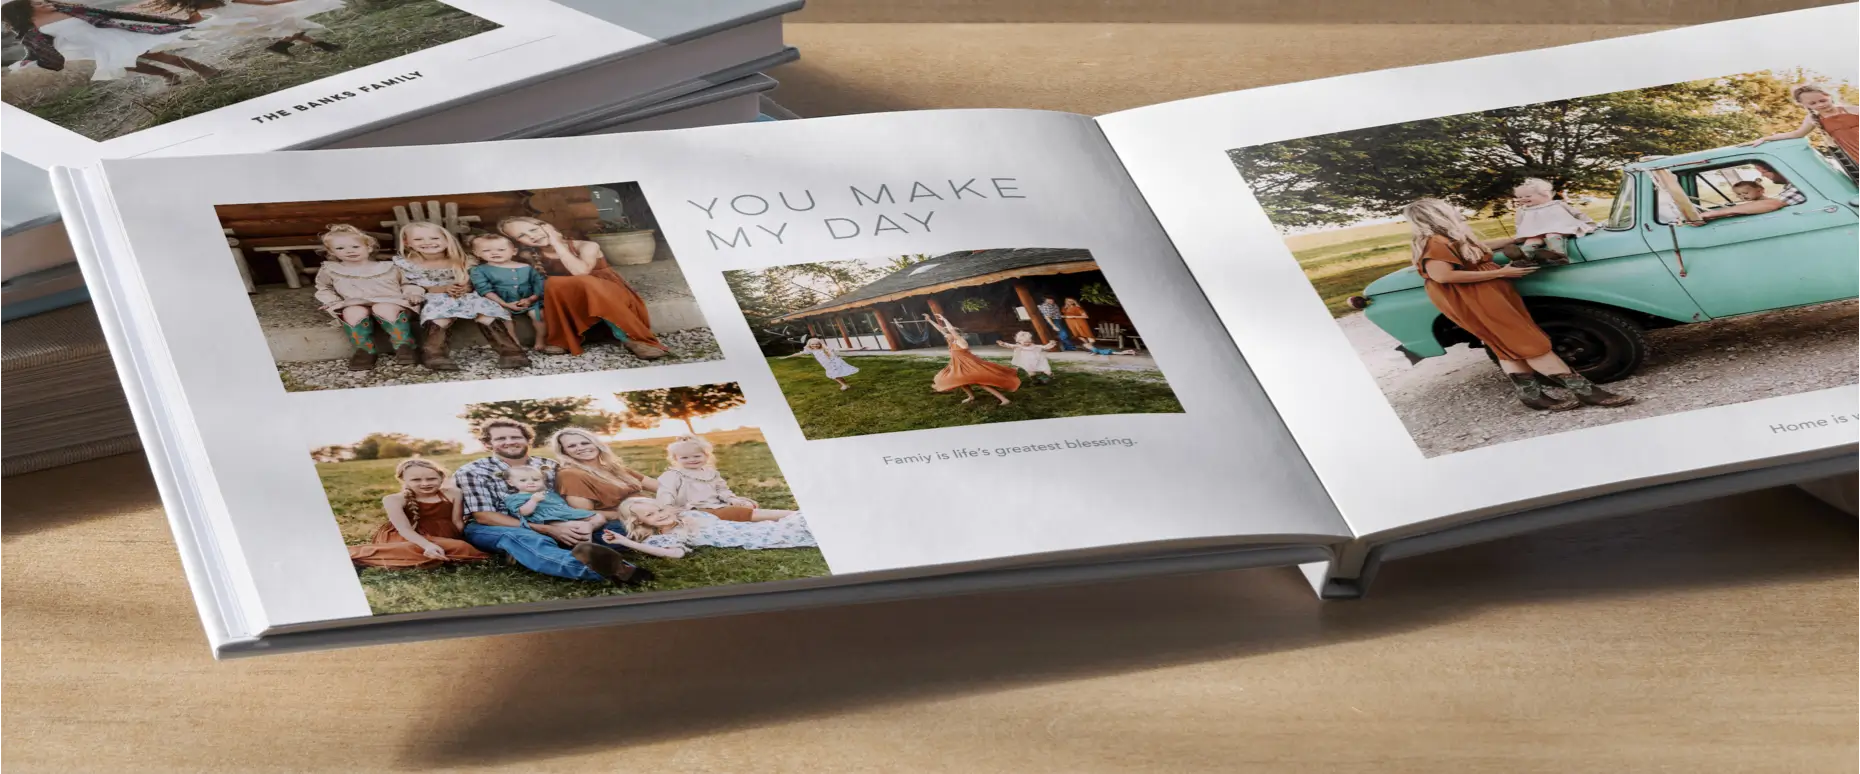 Create Custom Photo Books & Albums Online | Shutterfly